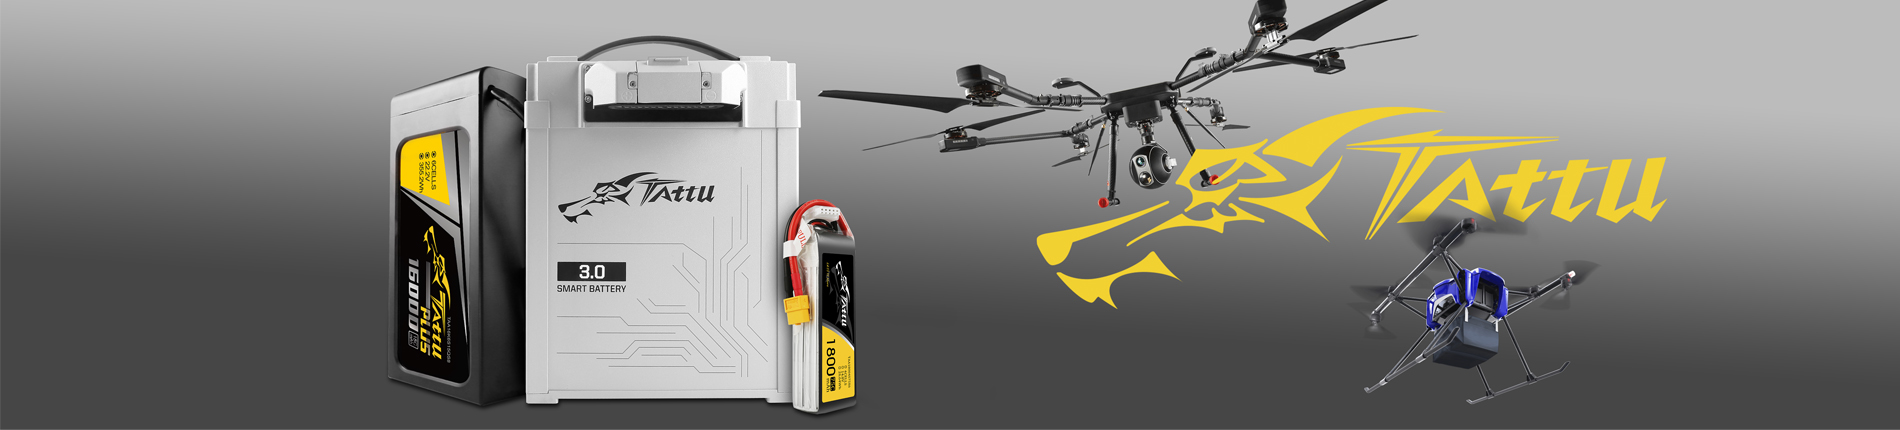 Drone Battery, UAV Battery, Lipo Drone Battery Pack  Grepow.jpg